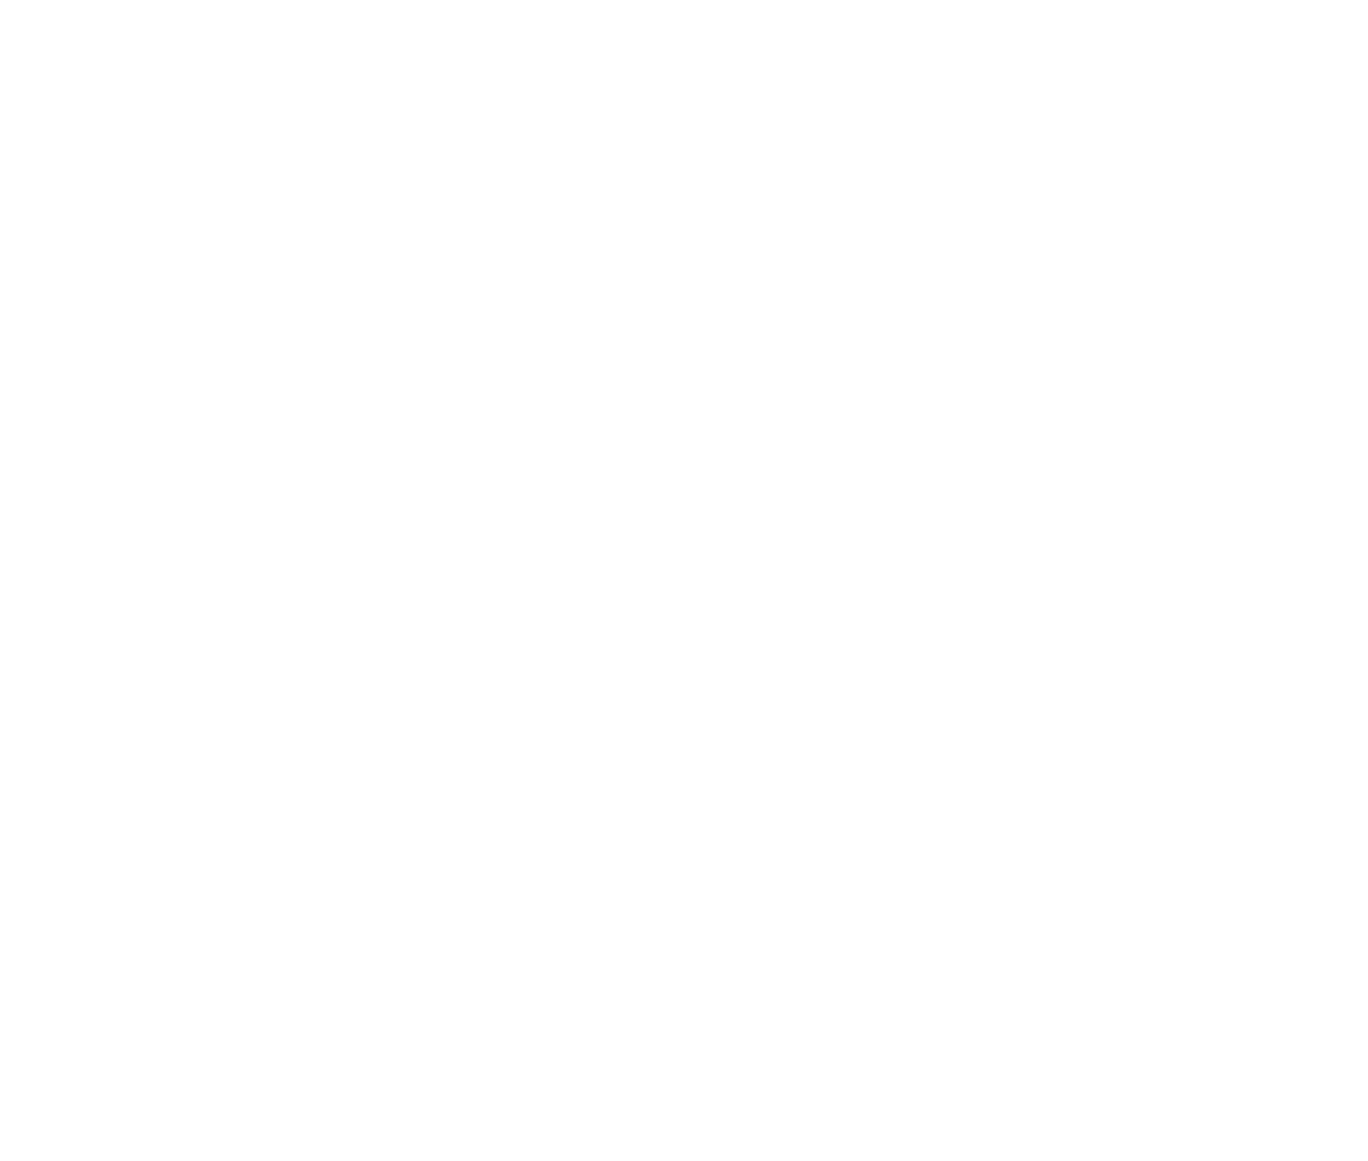 Maria Rocha